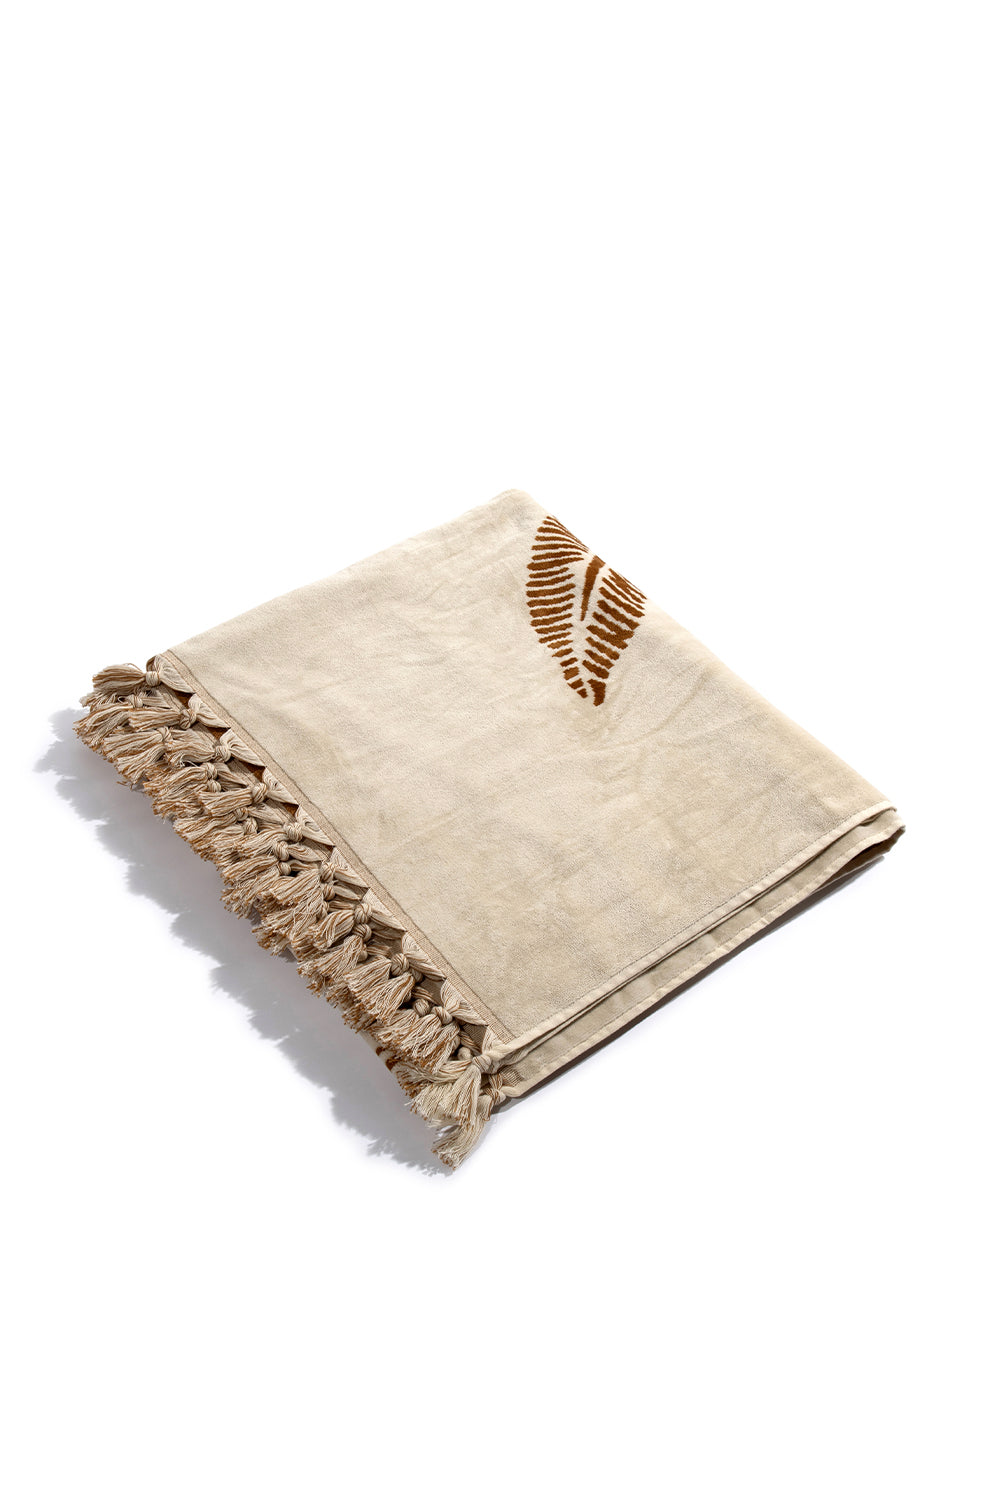 Palm Towel - Coconut Sand